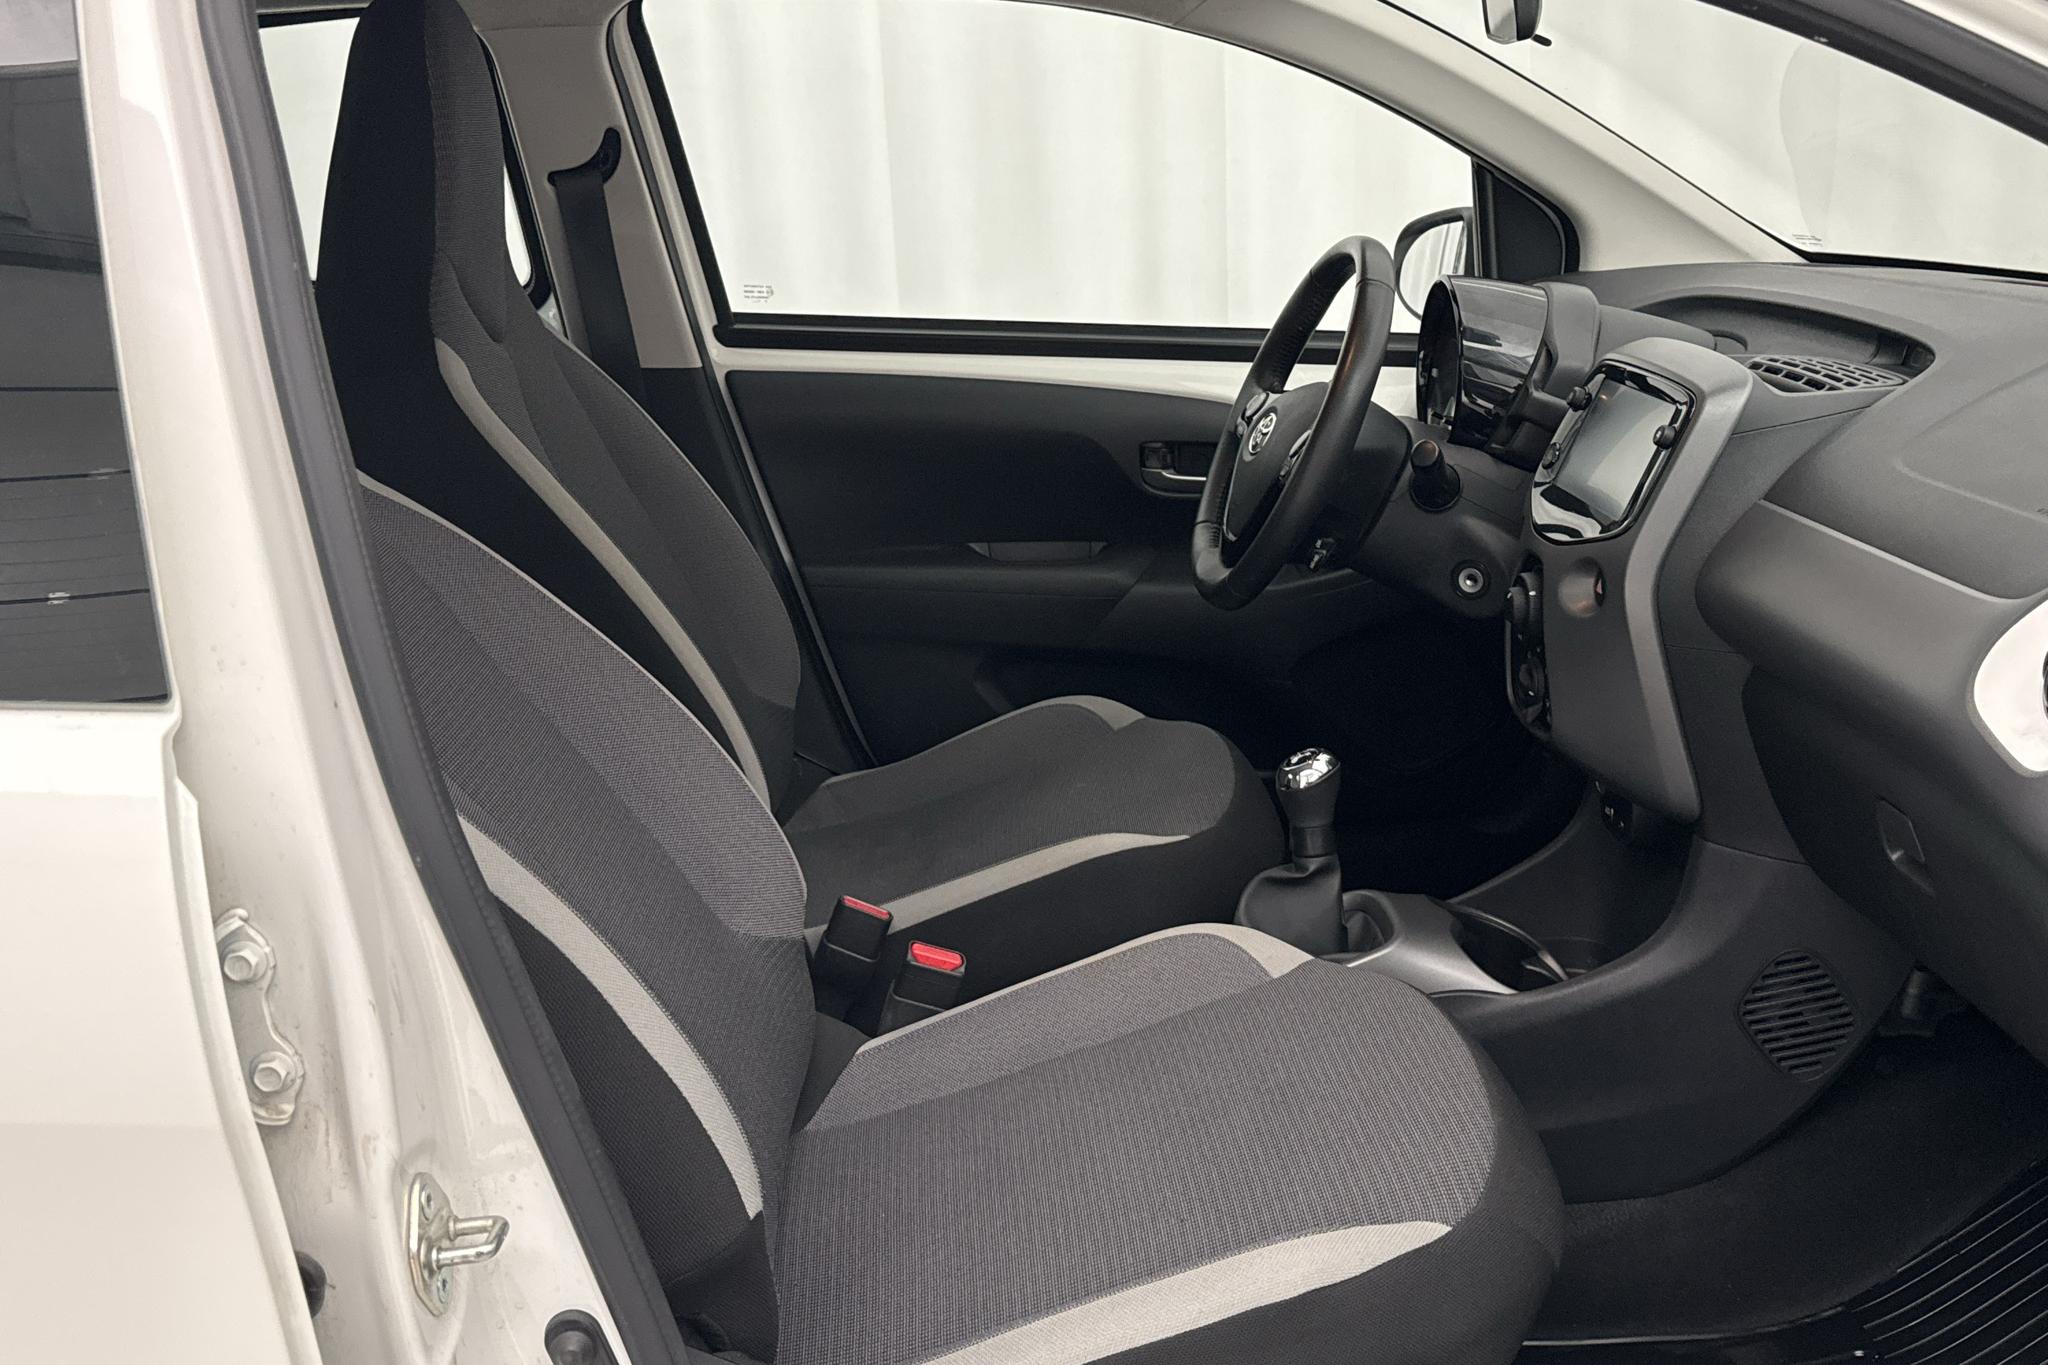 Toyota Aygo 1.0 5dr (72hk) - 12 280 km - Manual - white - 2021